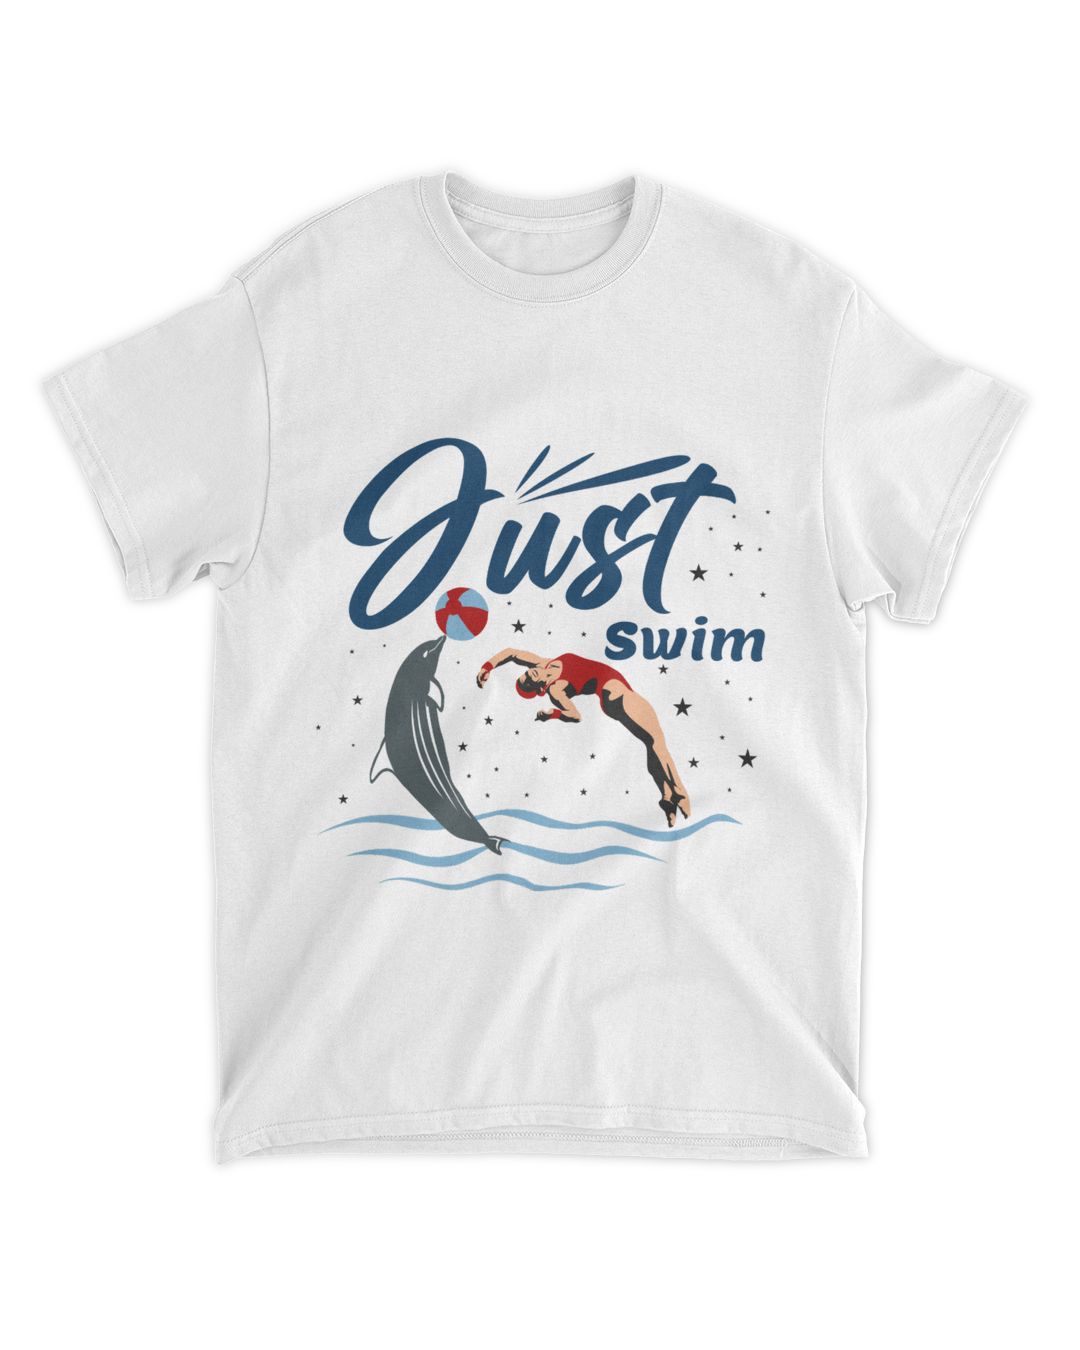 Just Swim, Swimming T-Shirt, Swim Tank Top, Swimmer Shirt | SenPrints